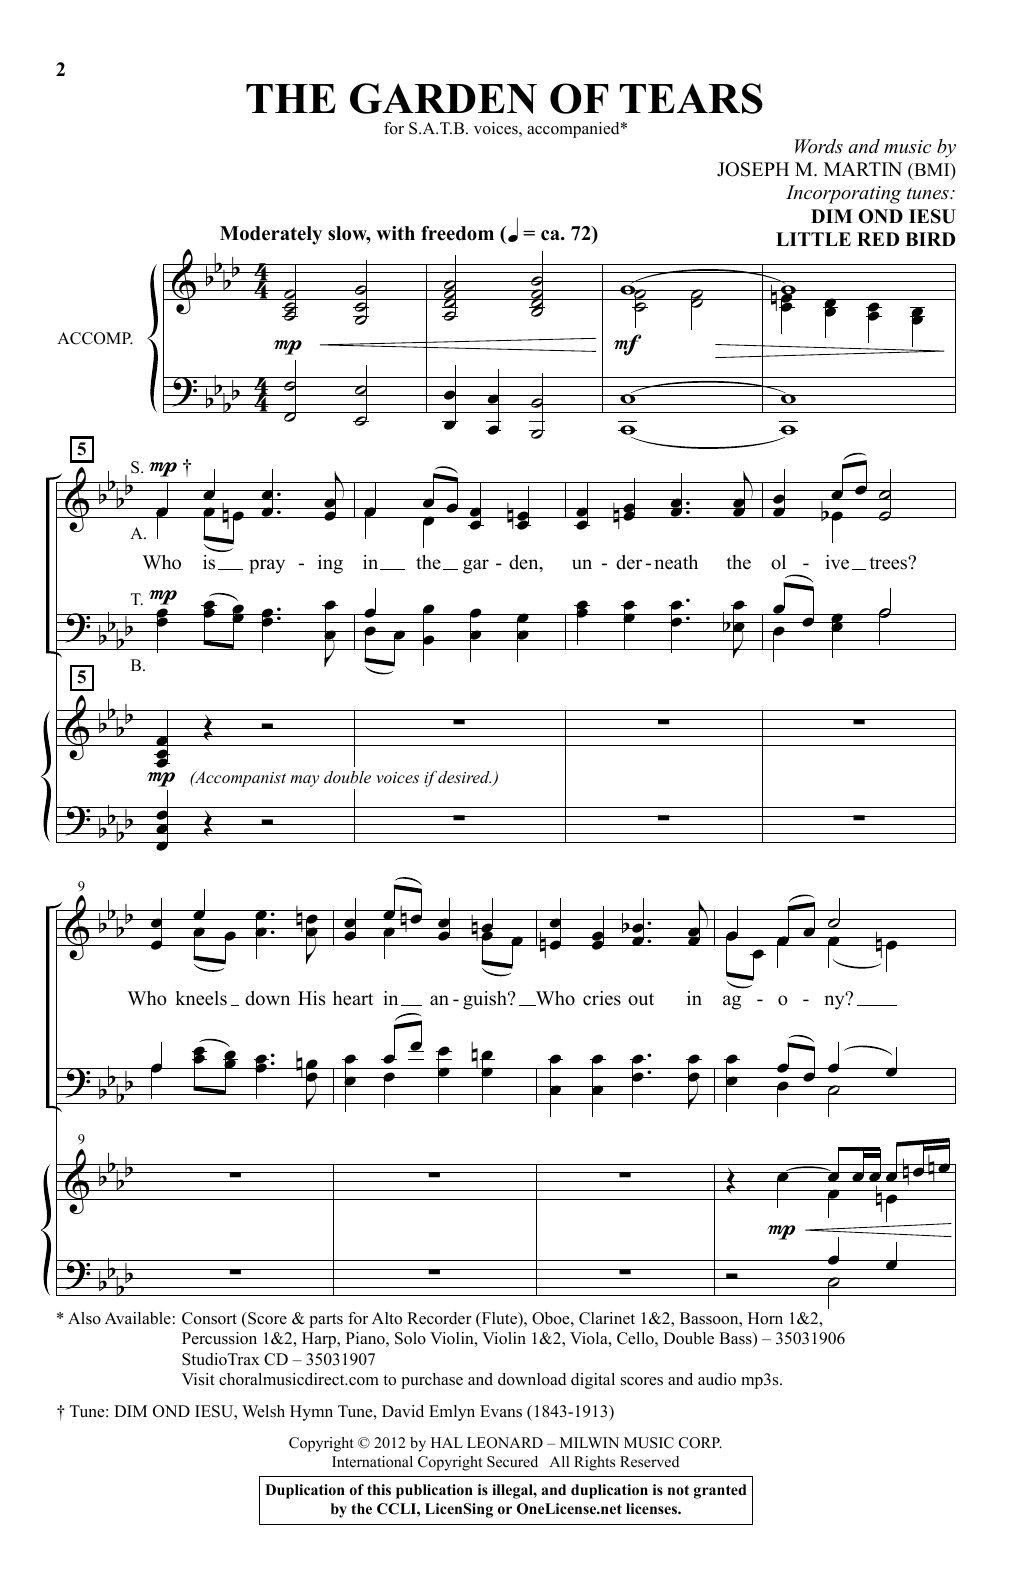 Joseph M. Martin The Garden Of Tears sheet music notes and chords arranged for SATB Choir